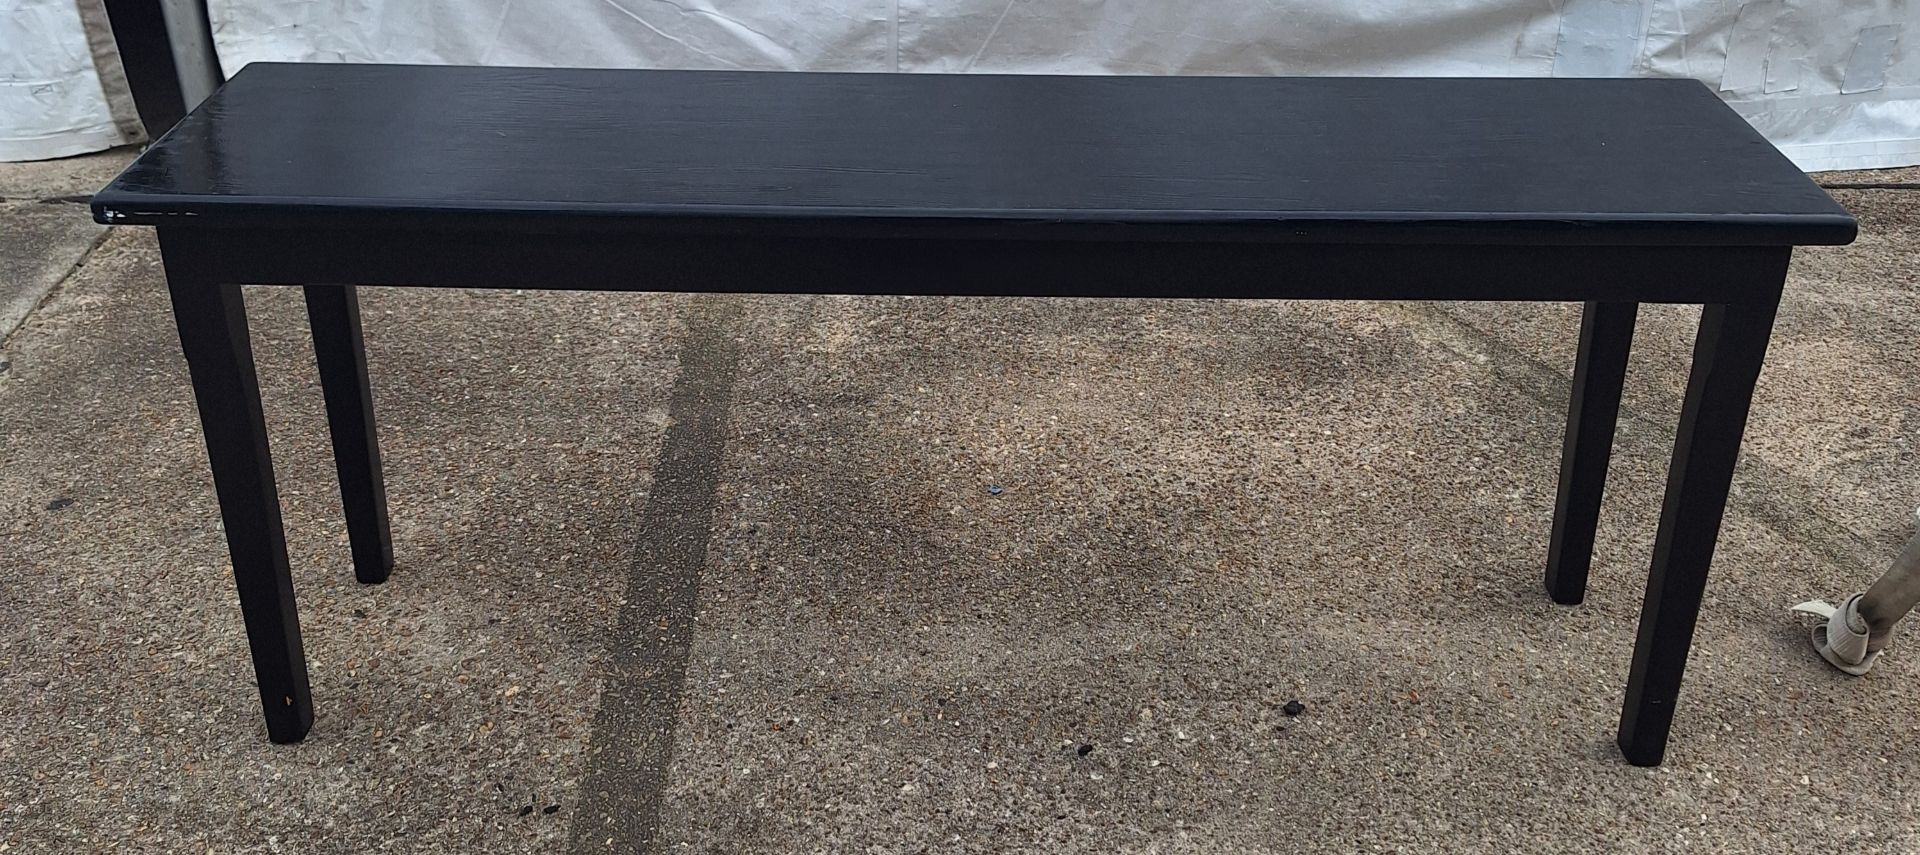 Black Wood Table, 6' x 18" x 29.5" high